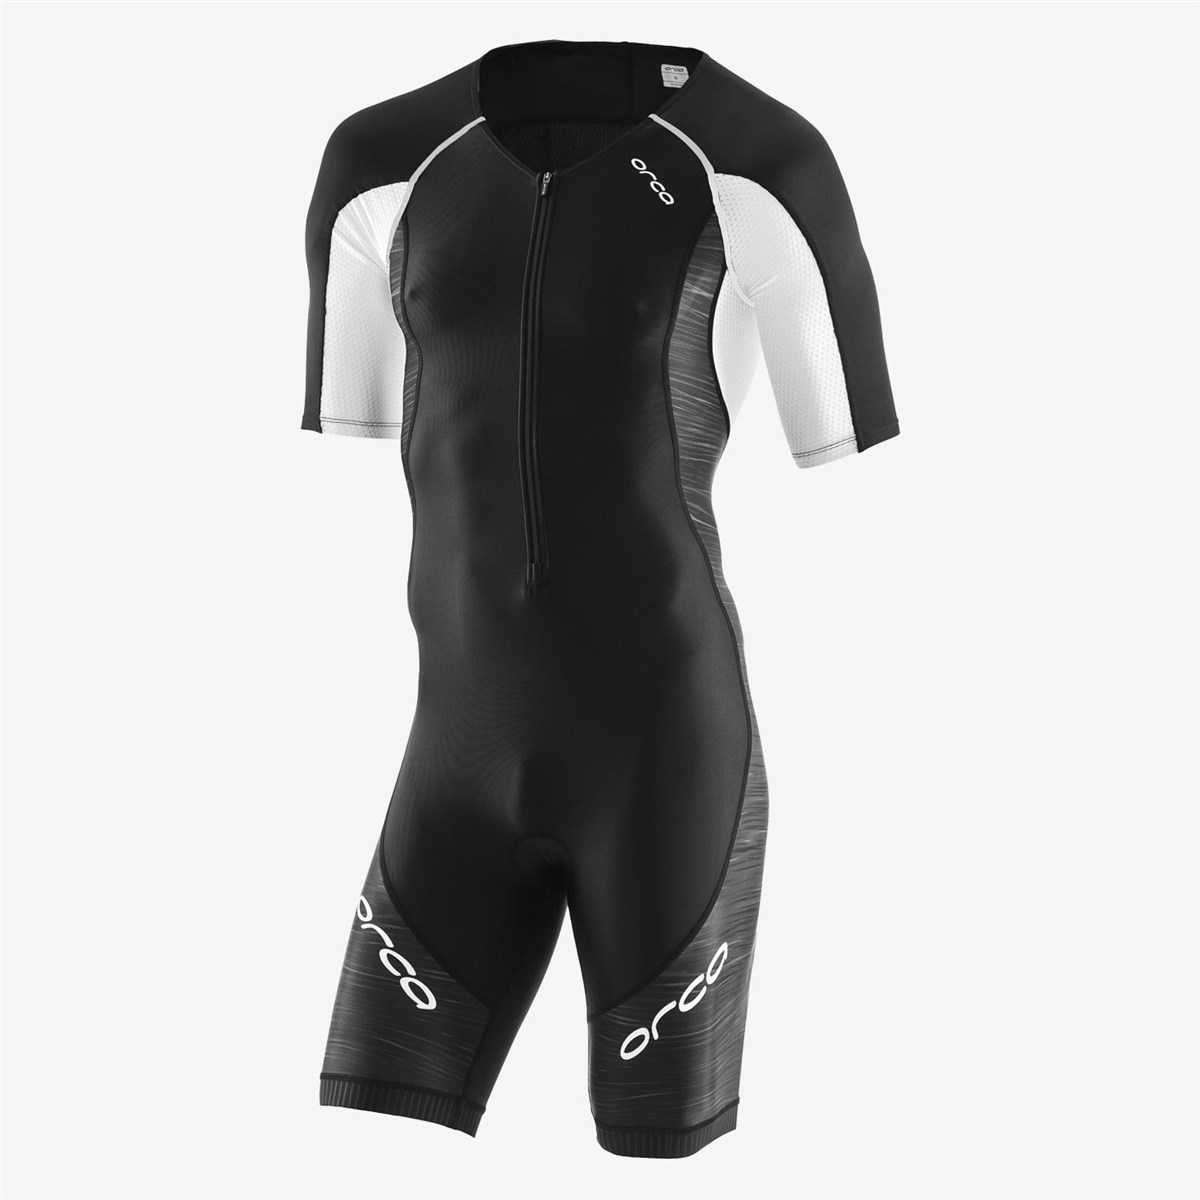 Orca Core Short Sleeve Tri Suit product image